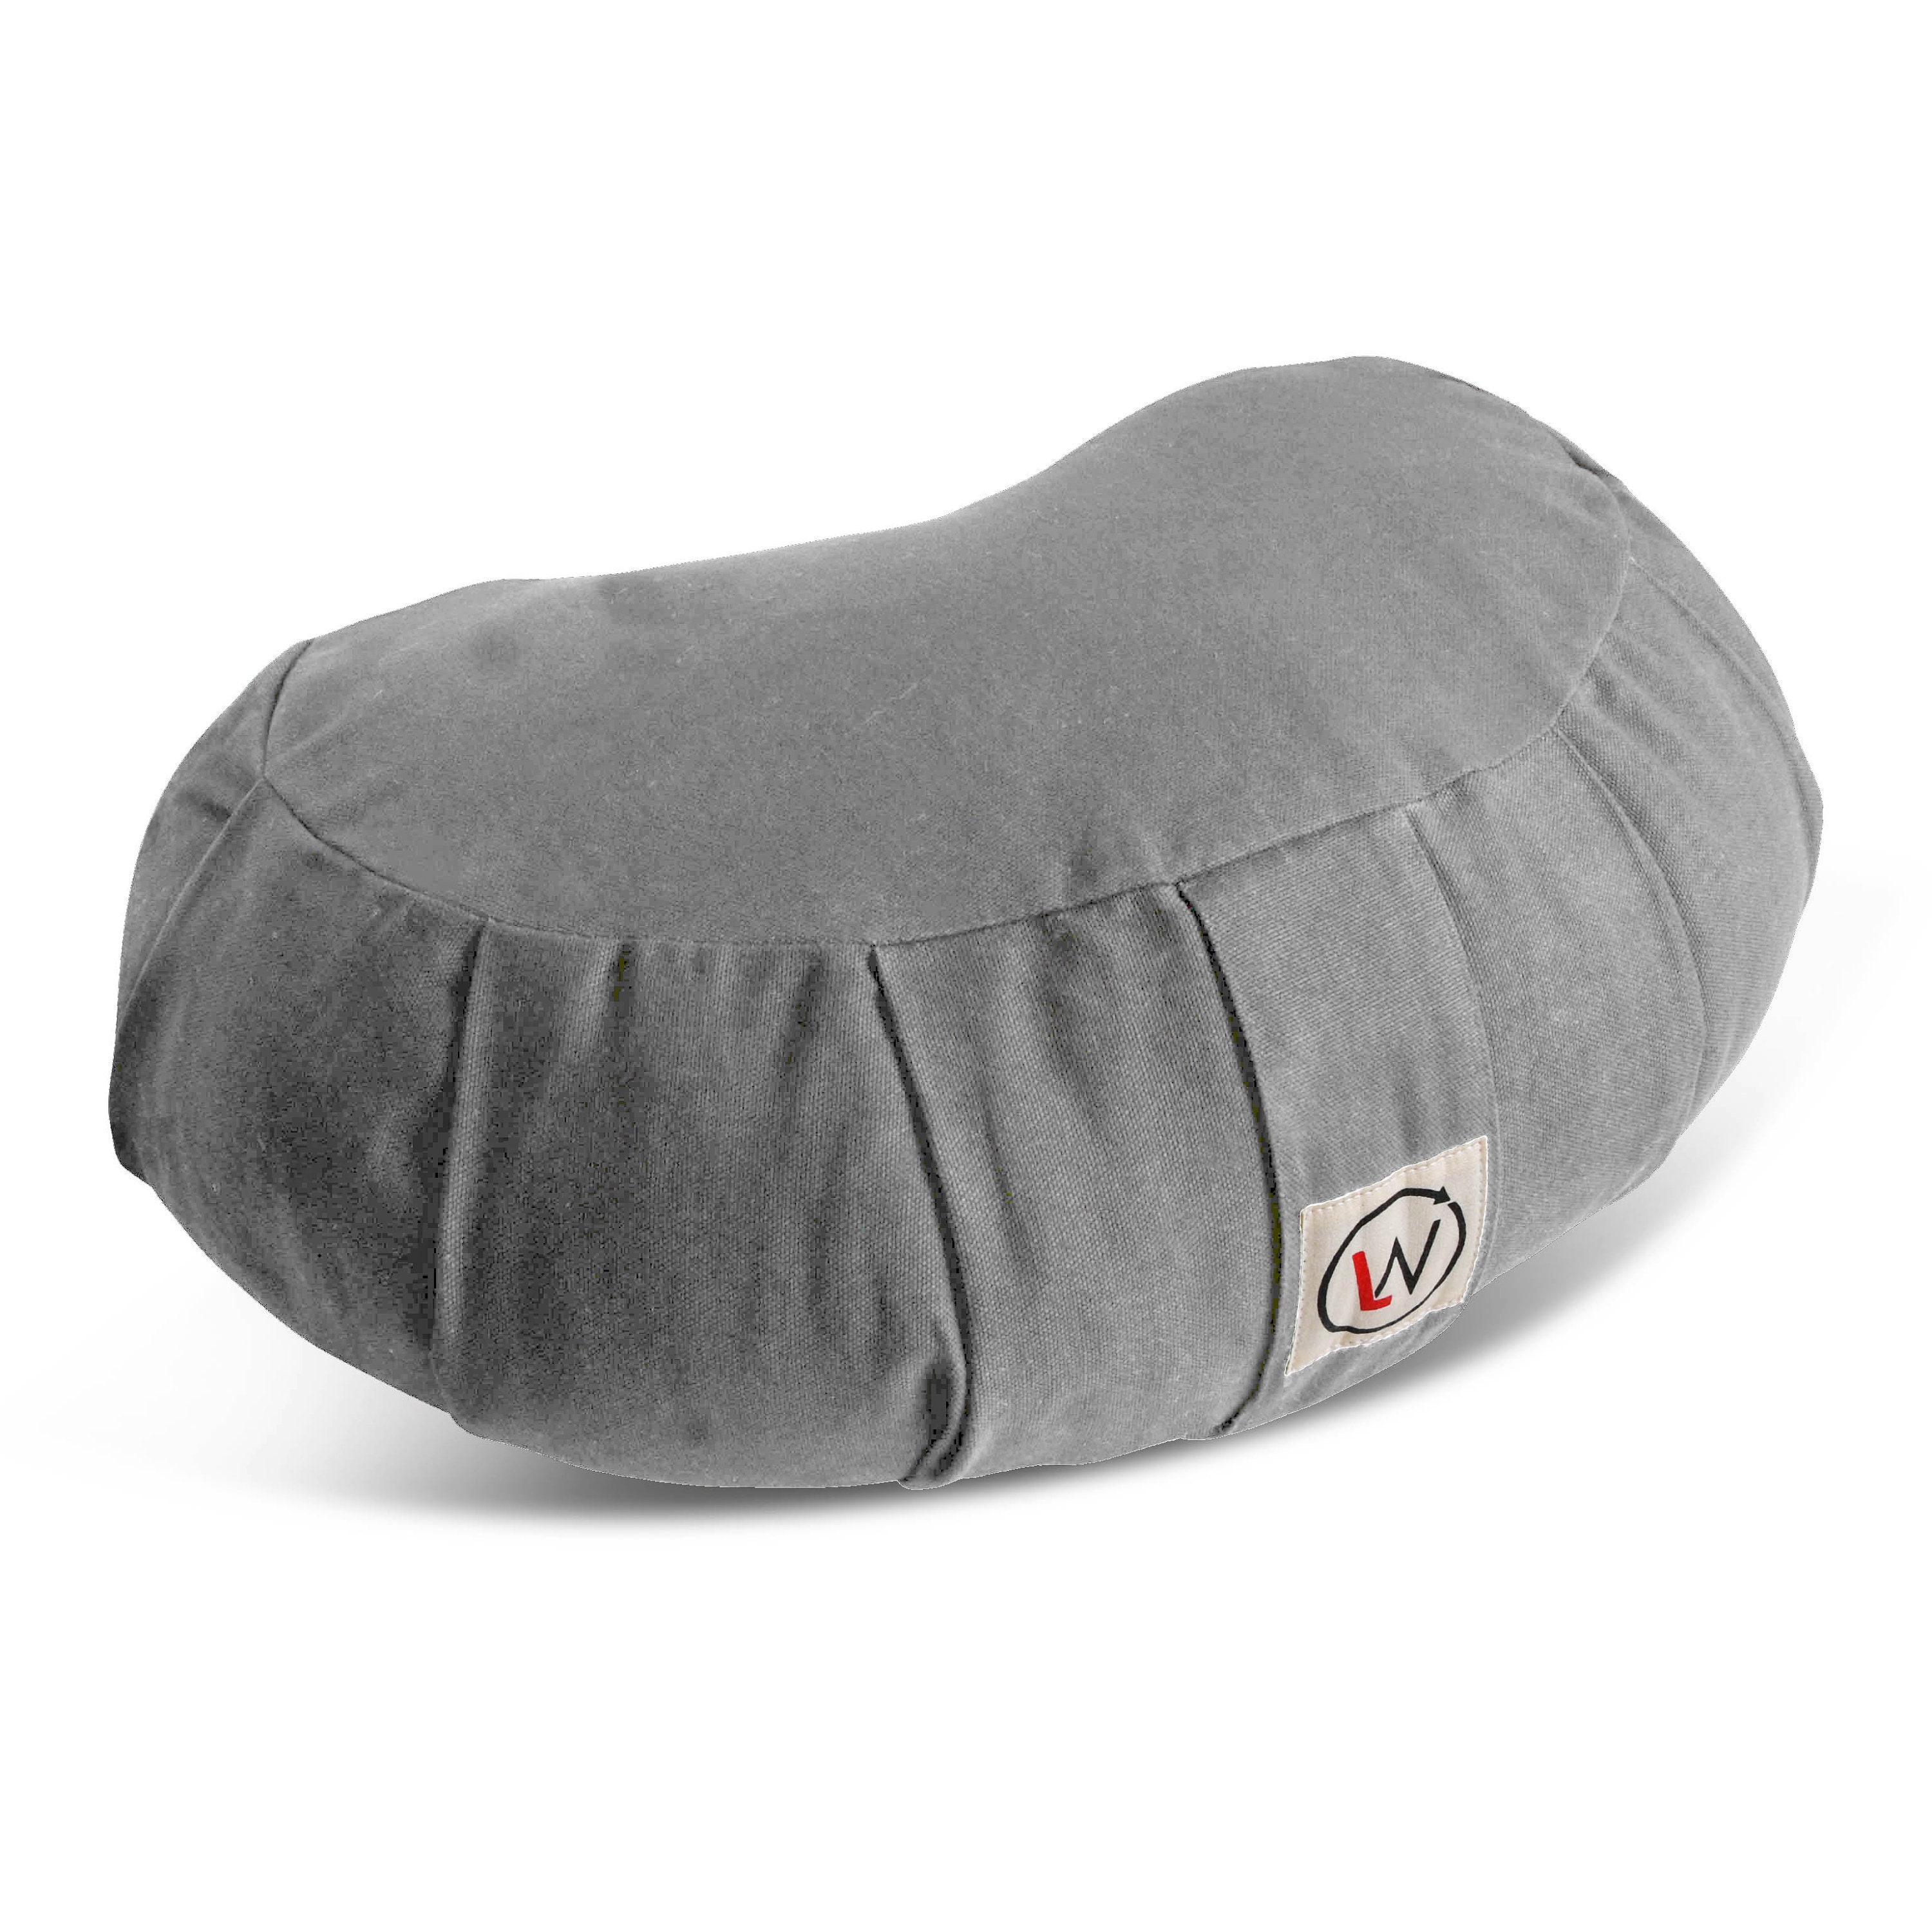 Linen Floor cushion with Buckwheat hulls Meditation zabuton/ for Yoga –  HempOrganicLife